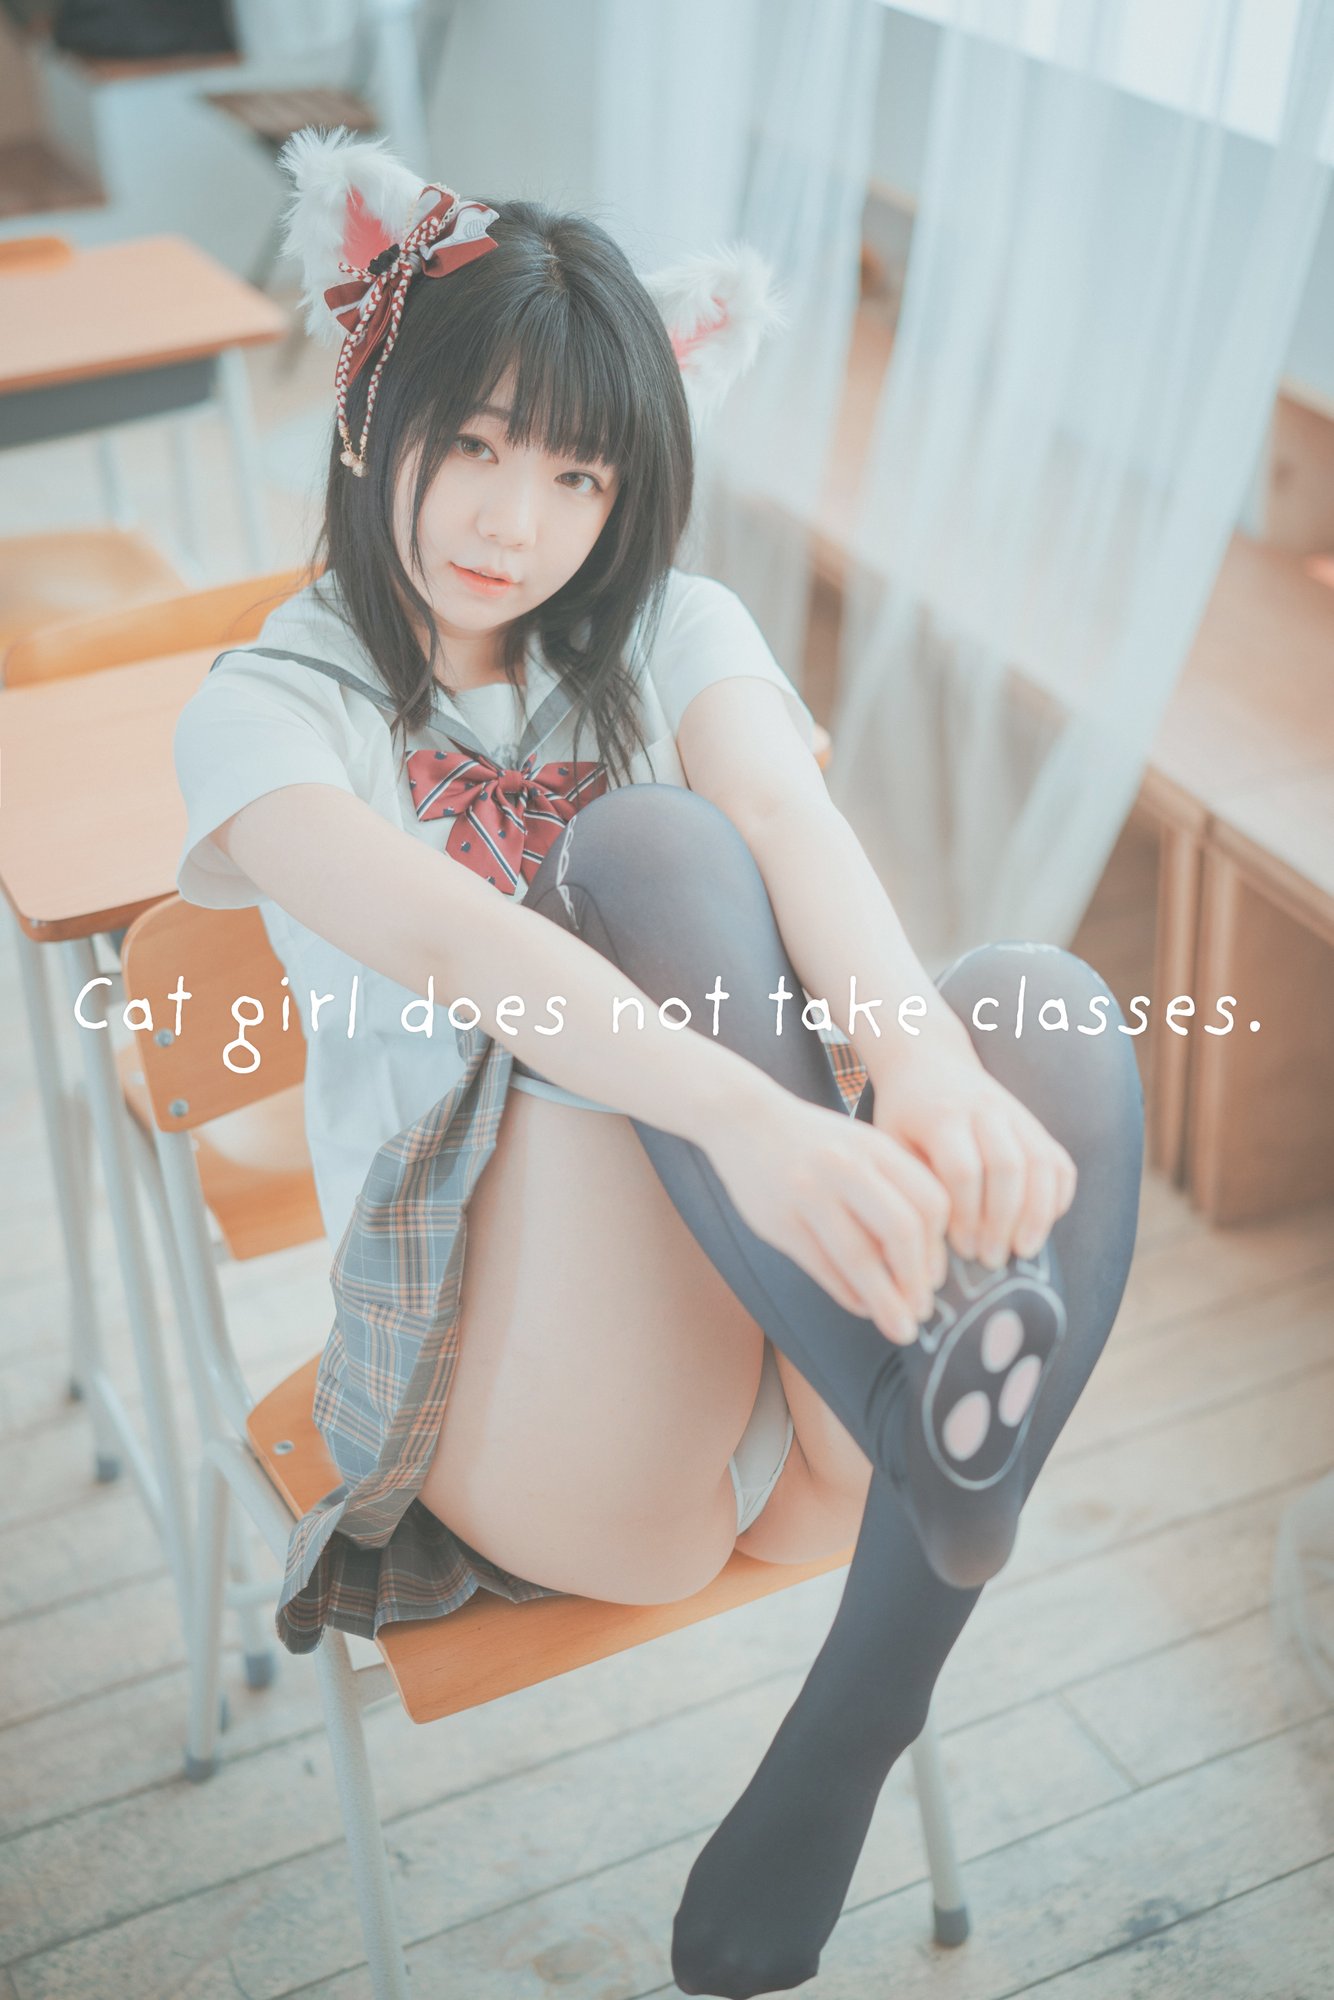 [DJAWA] Cat girl does not take classes